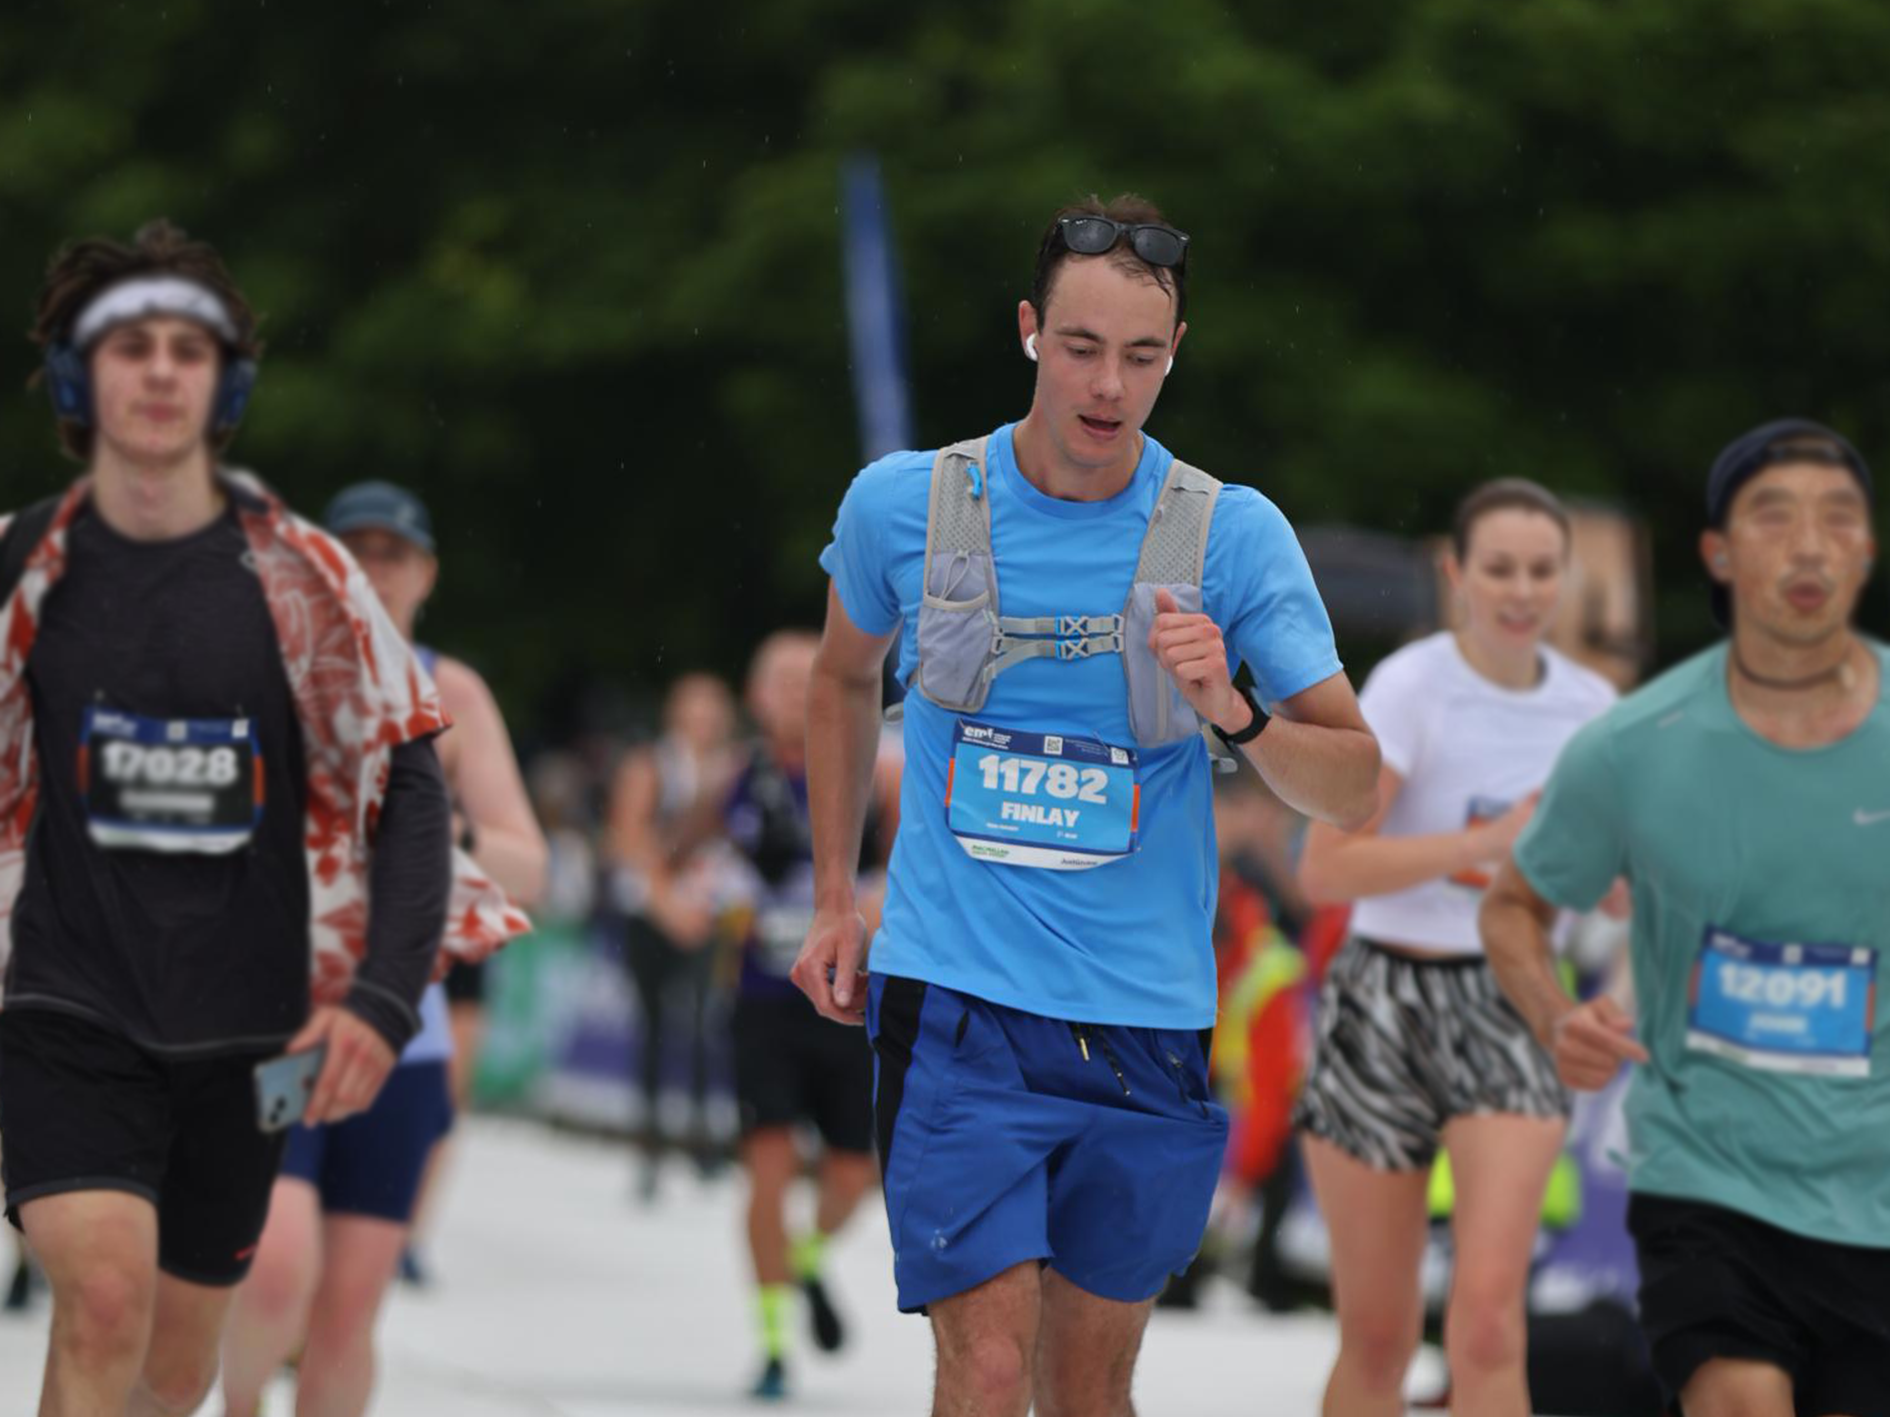 Volunteer Finlay Young Powers Through to Raise £2100 in Edinburgh Marathon